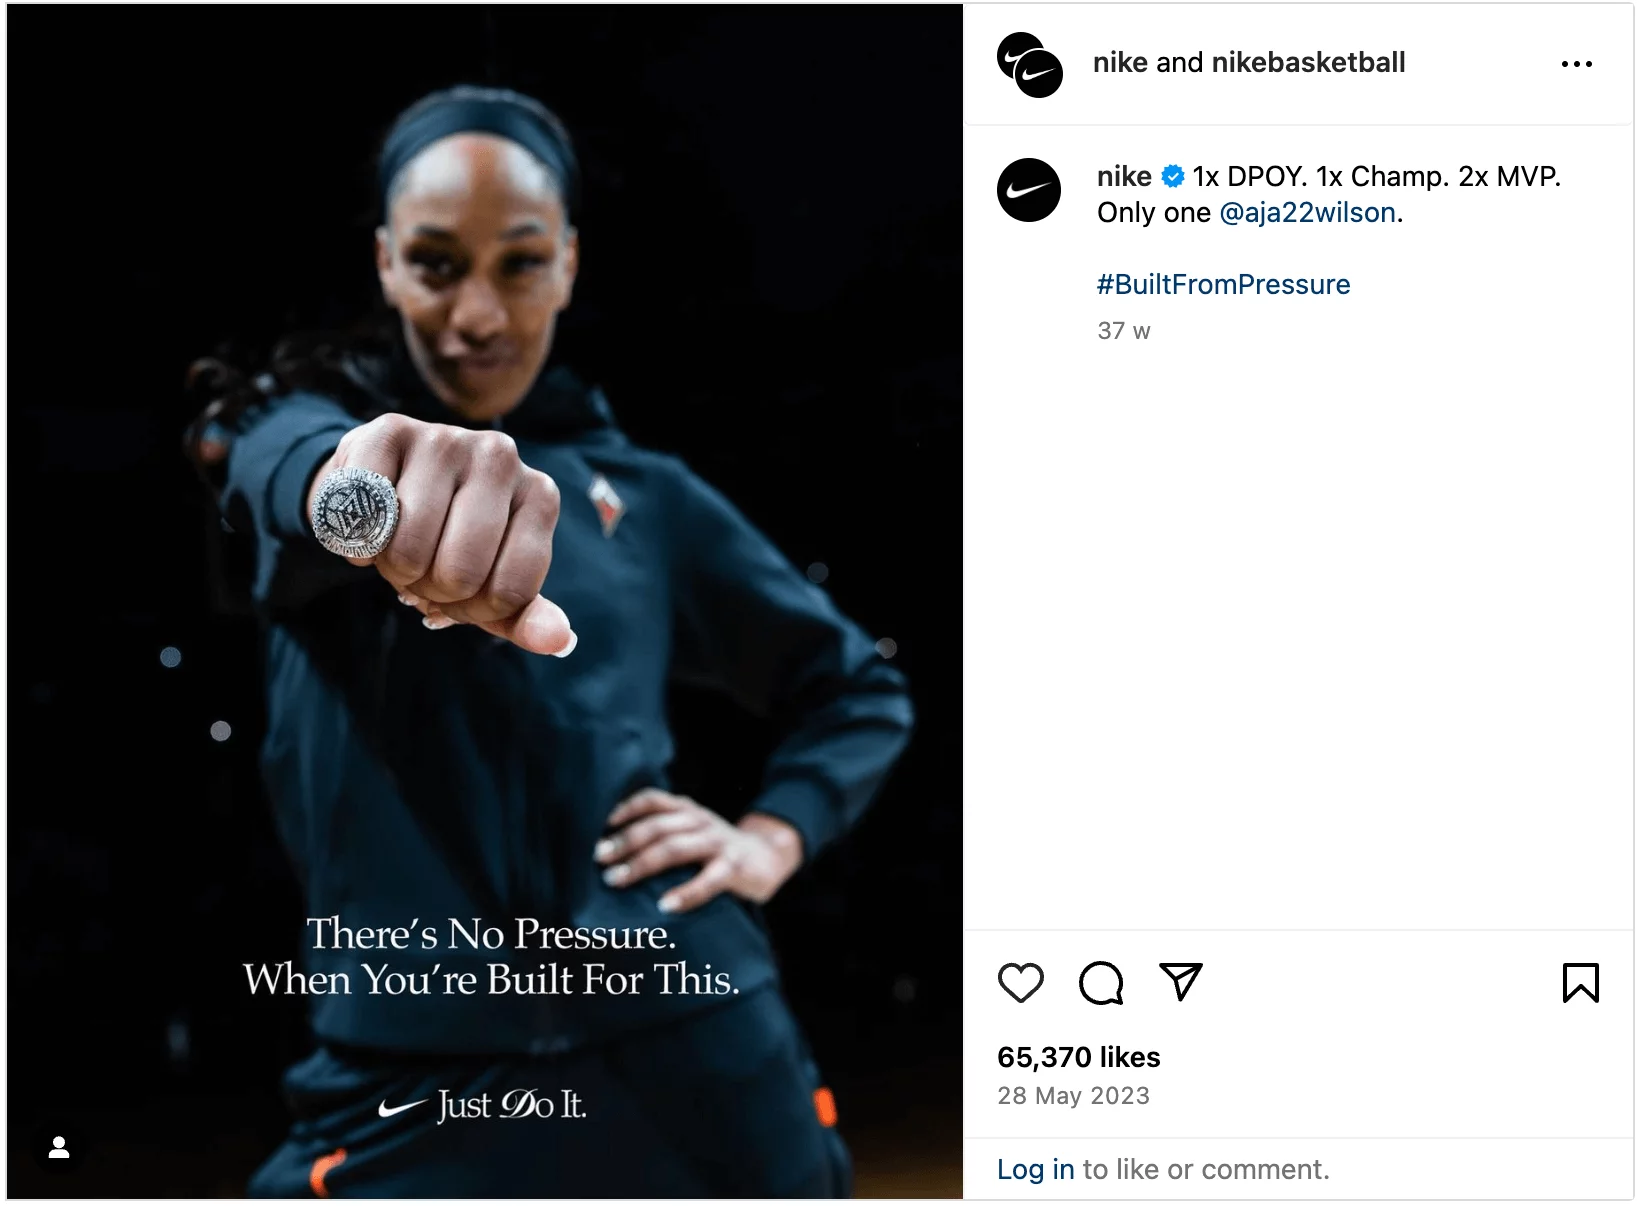 Nike's instagram post